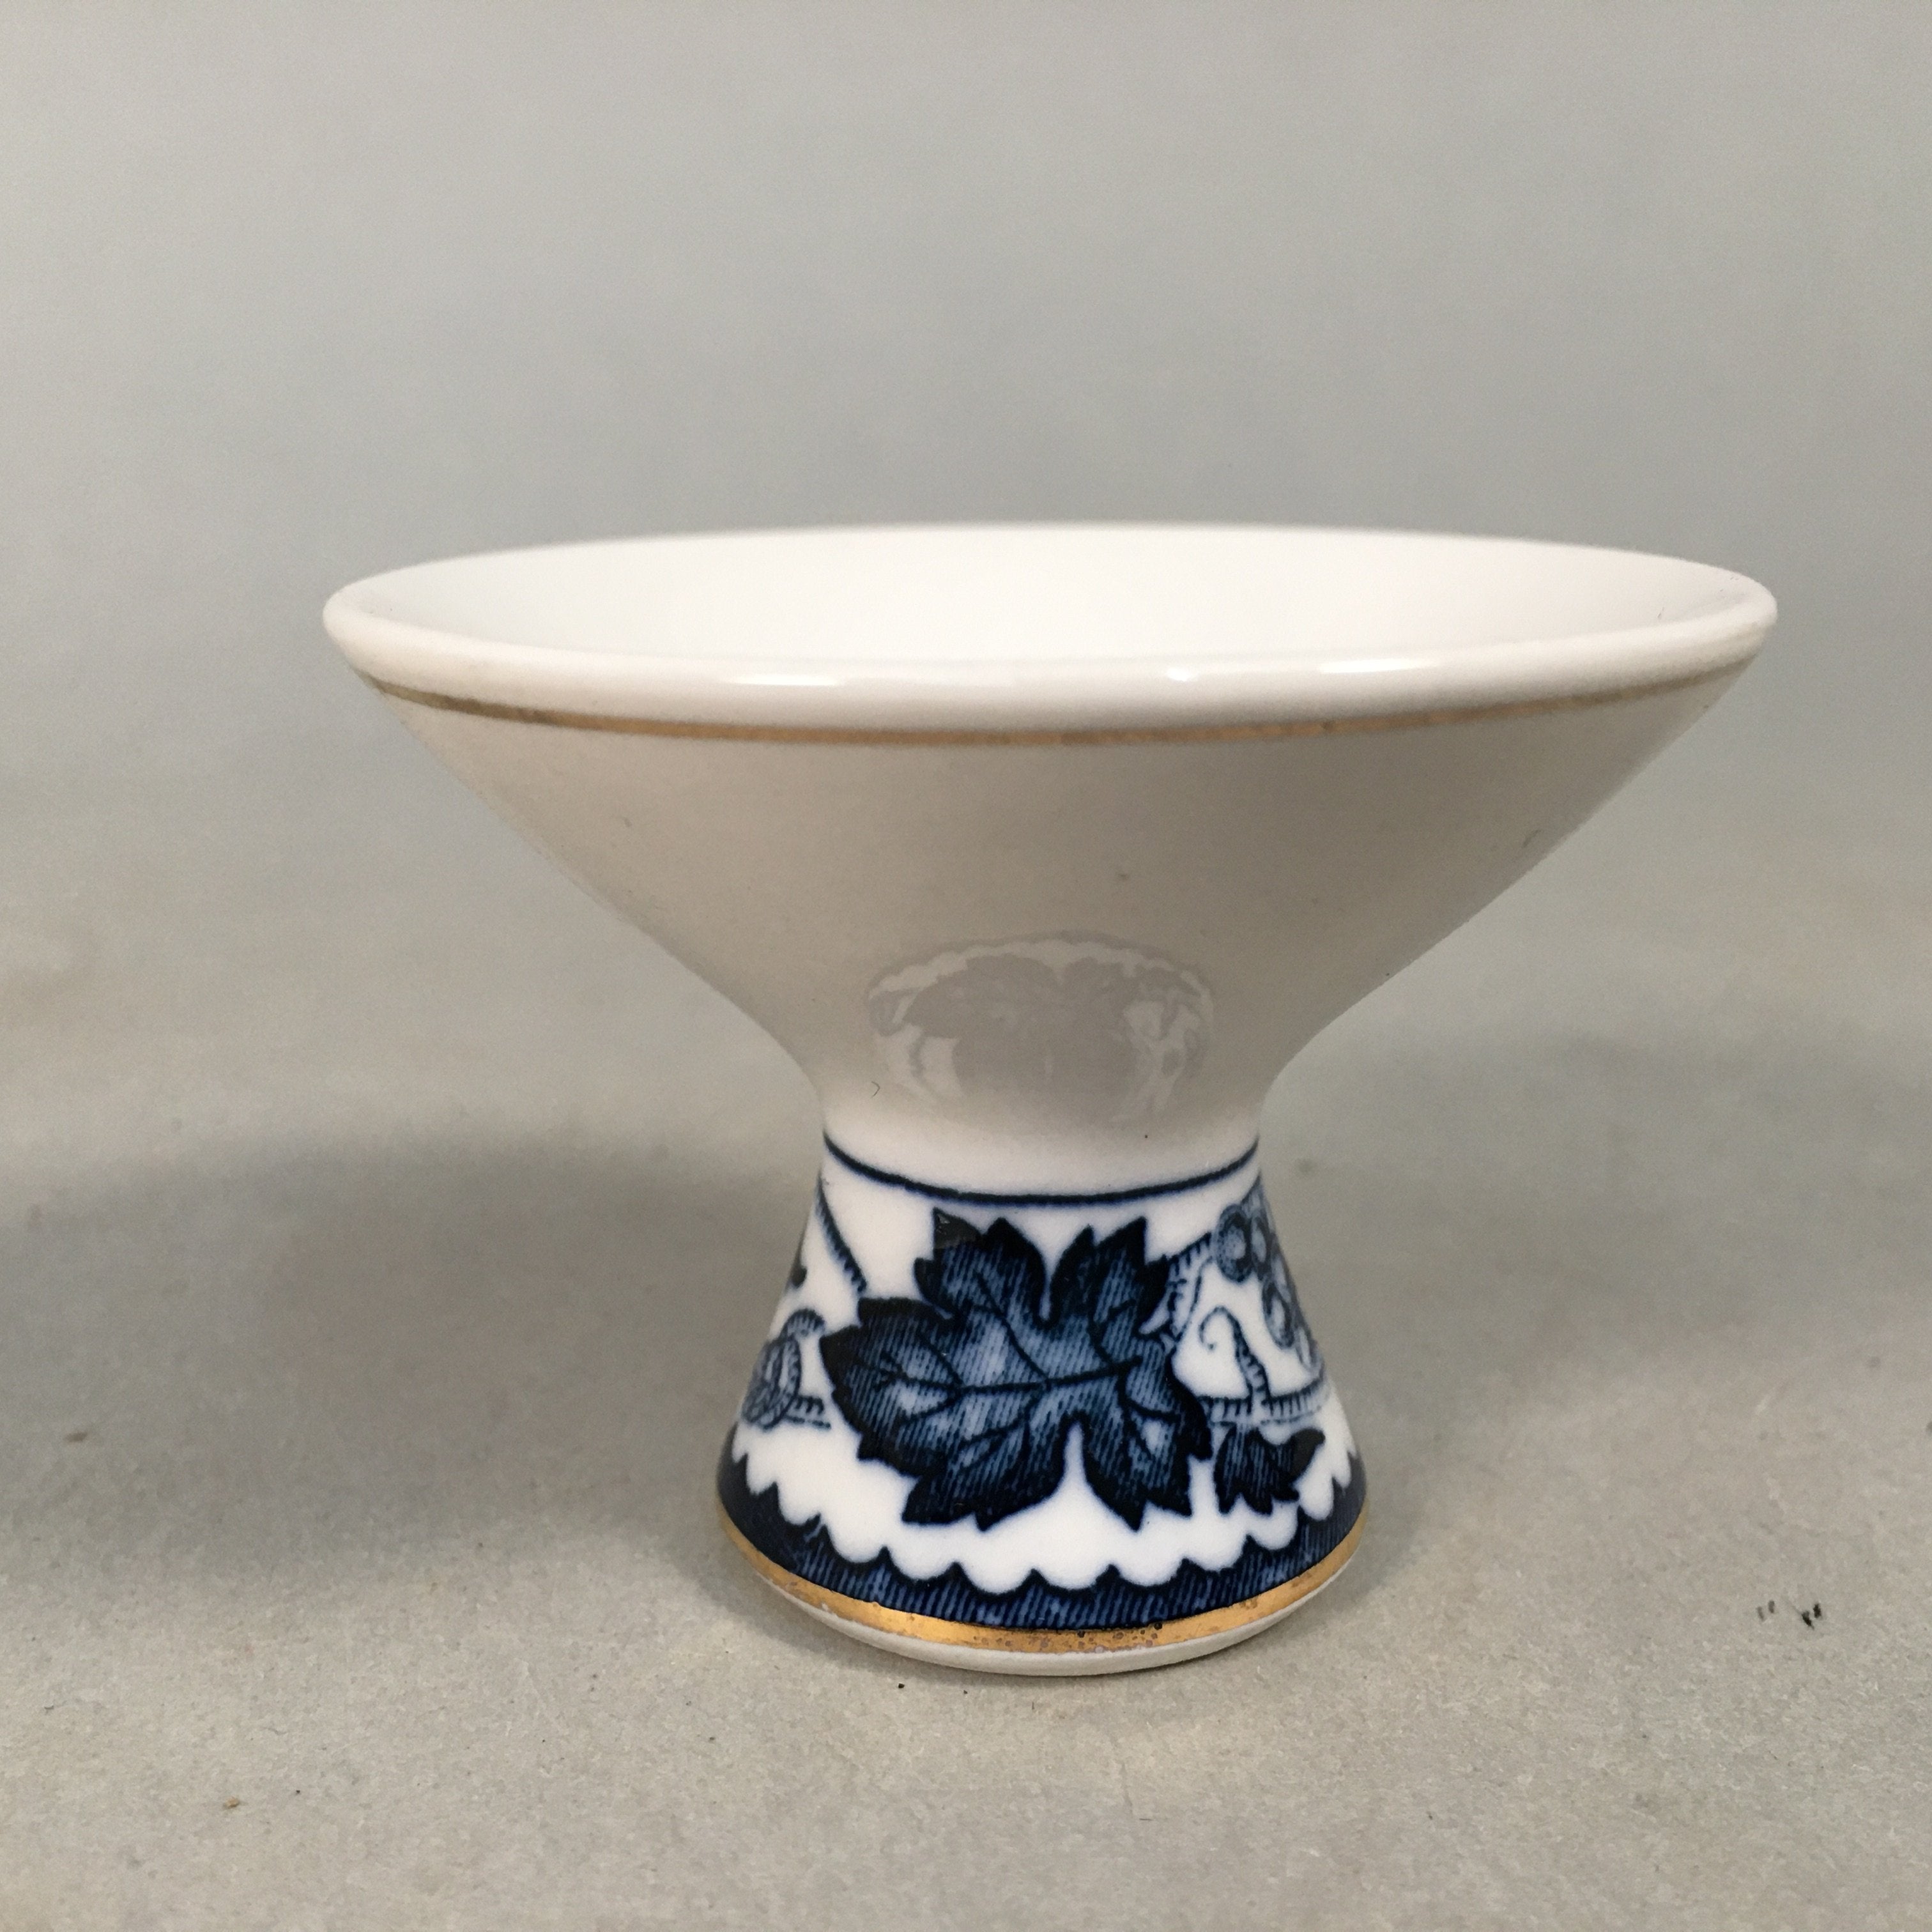 Japanese Porcelain Sake Cup Guinomi Sakazuki Vtg Blue White Sometsuke GU825